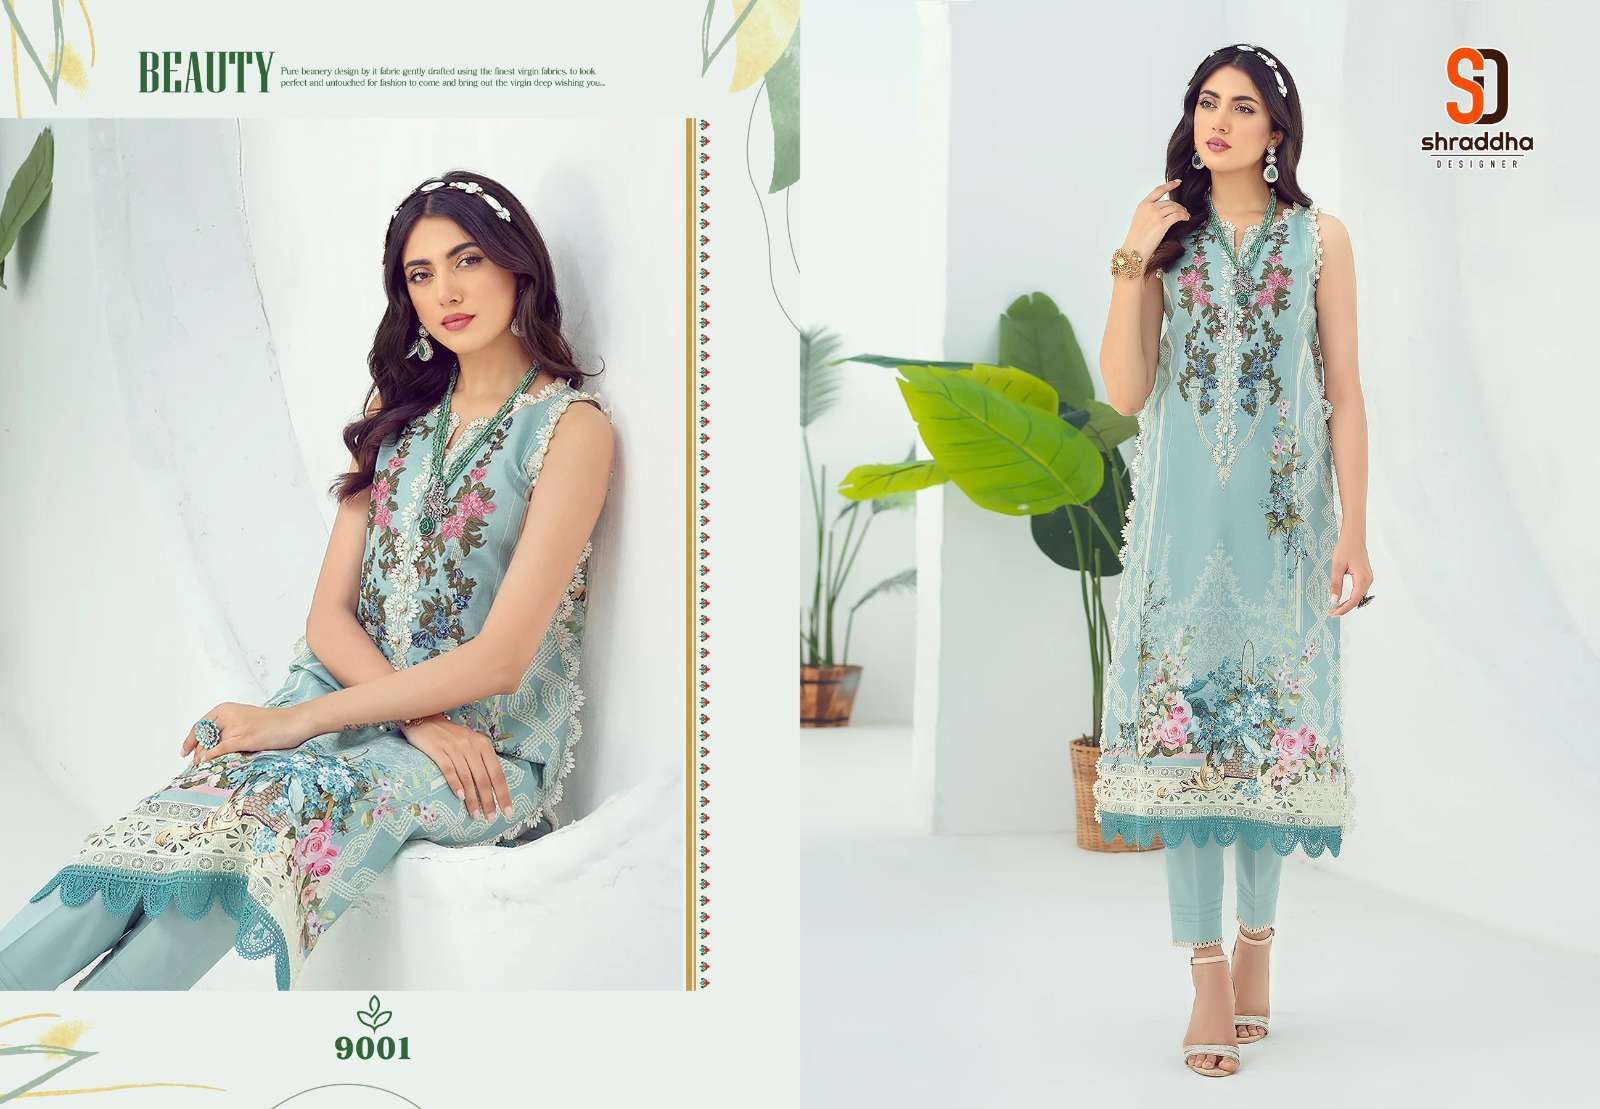 shraddha designer firdous vol-9 9001-9004 series unstitched designer pakistani salwar suits catalogue manufacturer surat